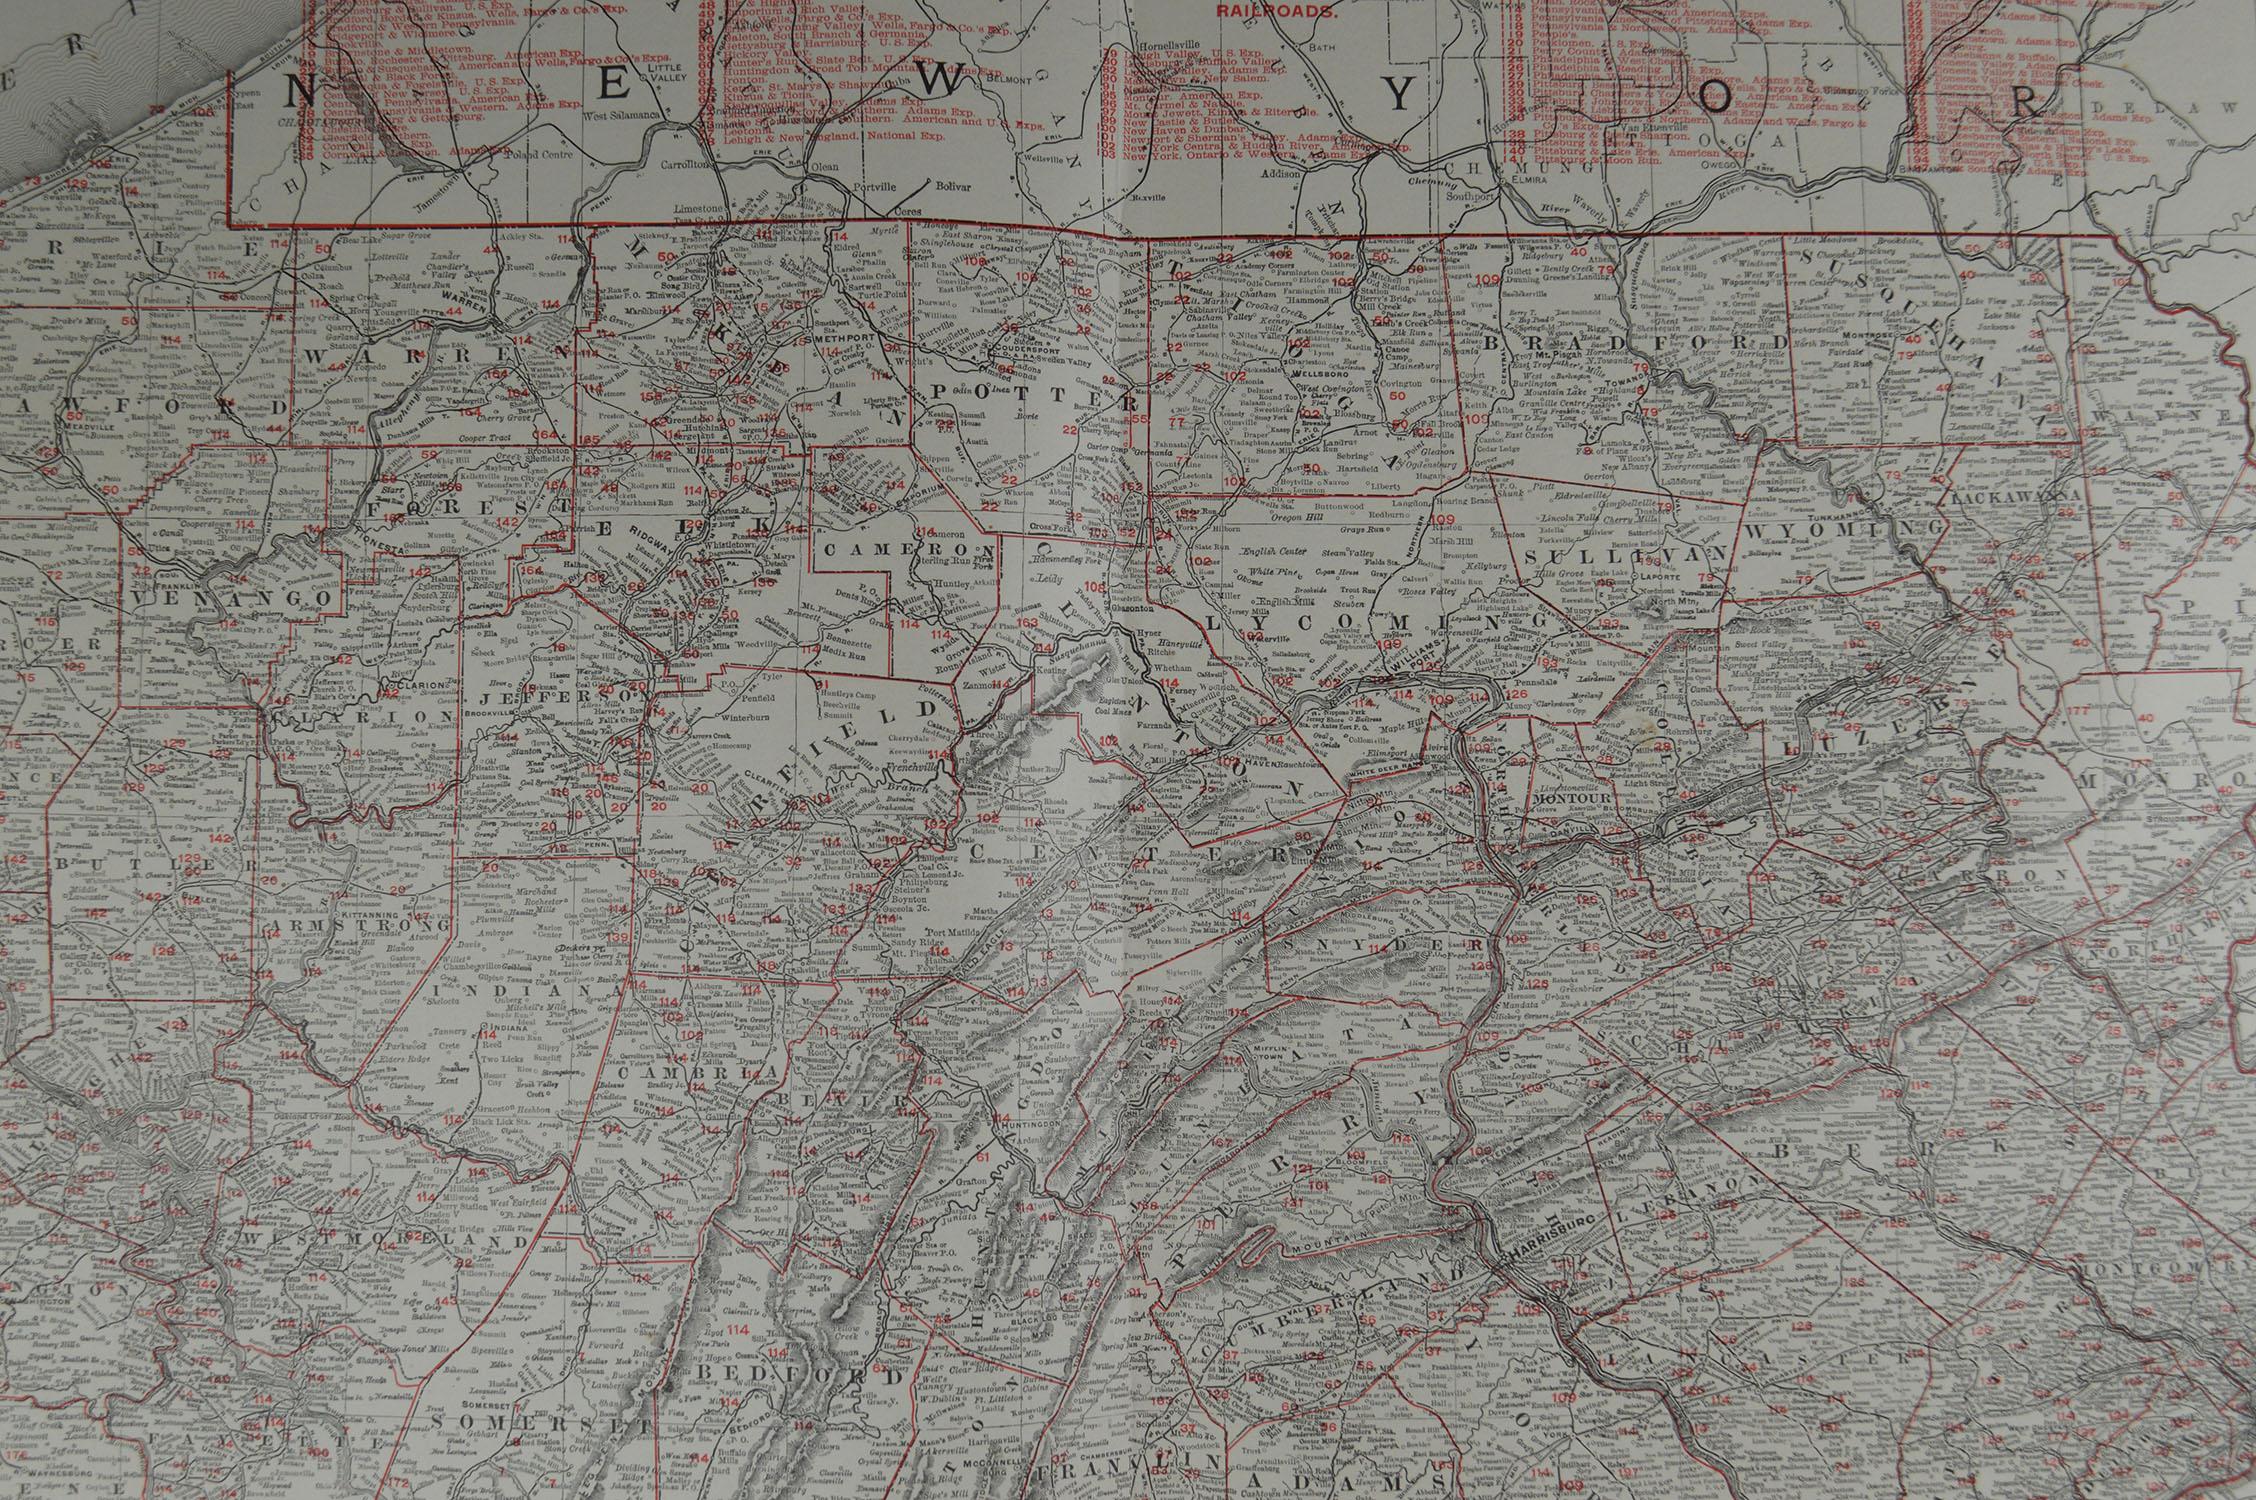 American Large Original Antique Map of Pennsylvania by Rand McNally, circa 1900